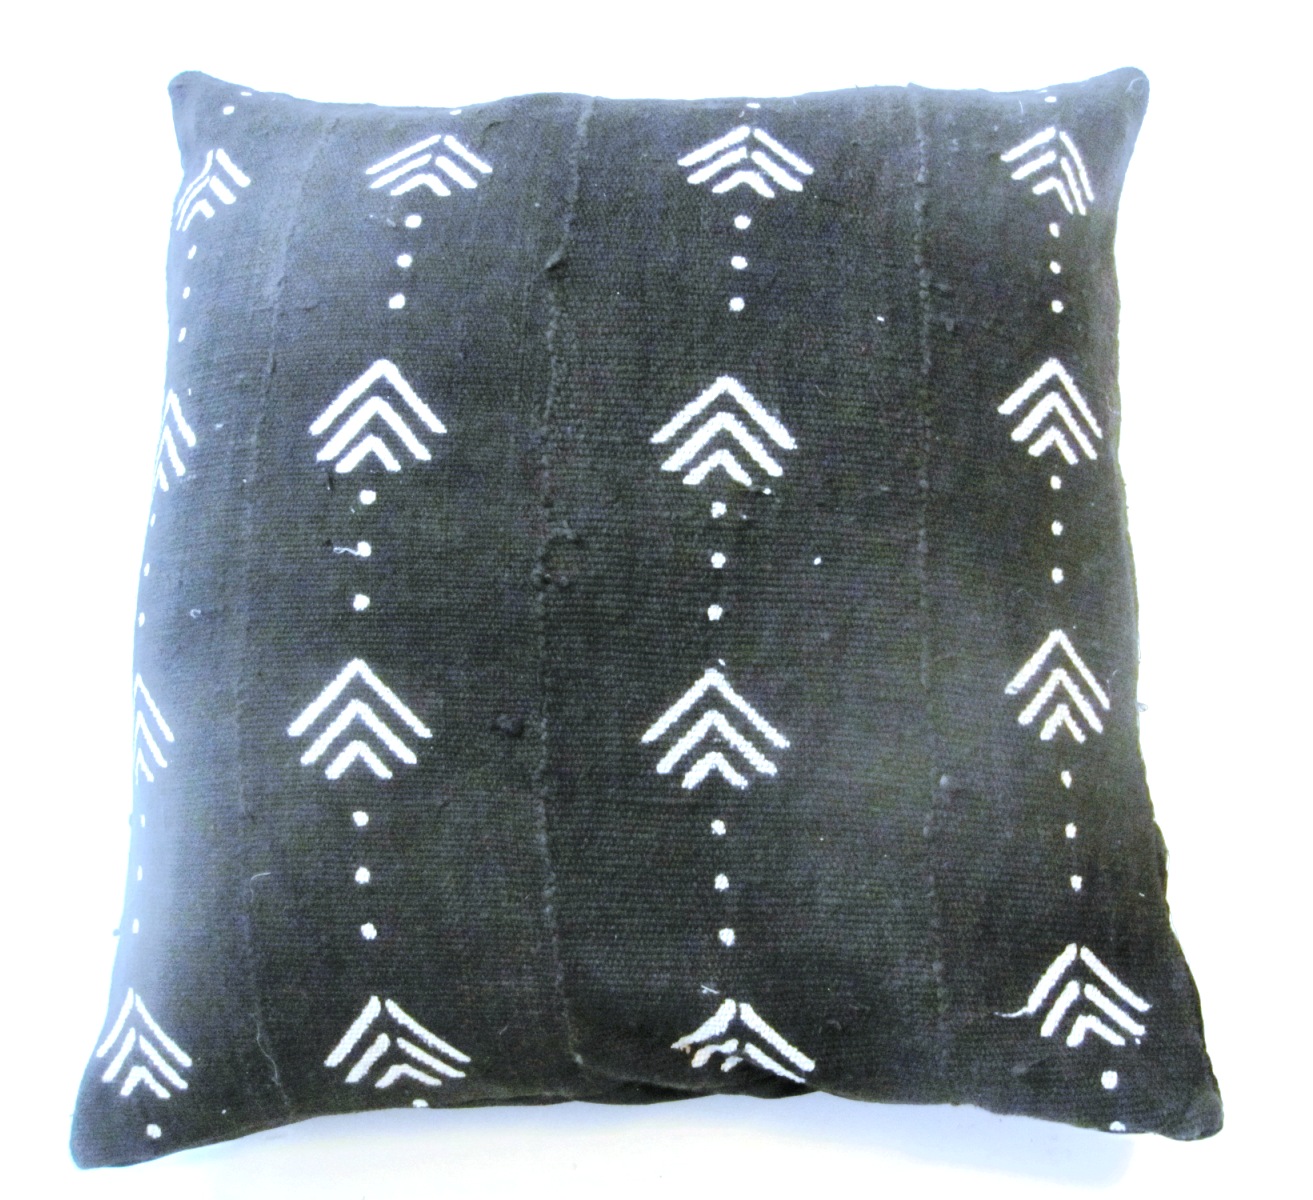 Bogolan Mud Cloth Cushion Cover - Black & White - Design #003